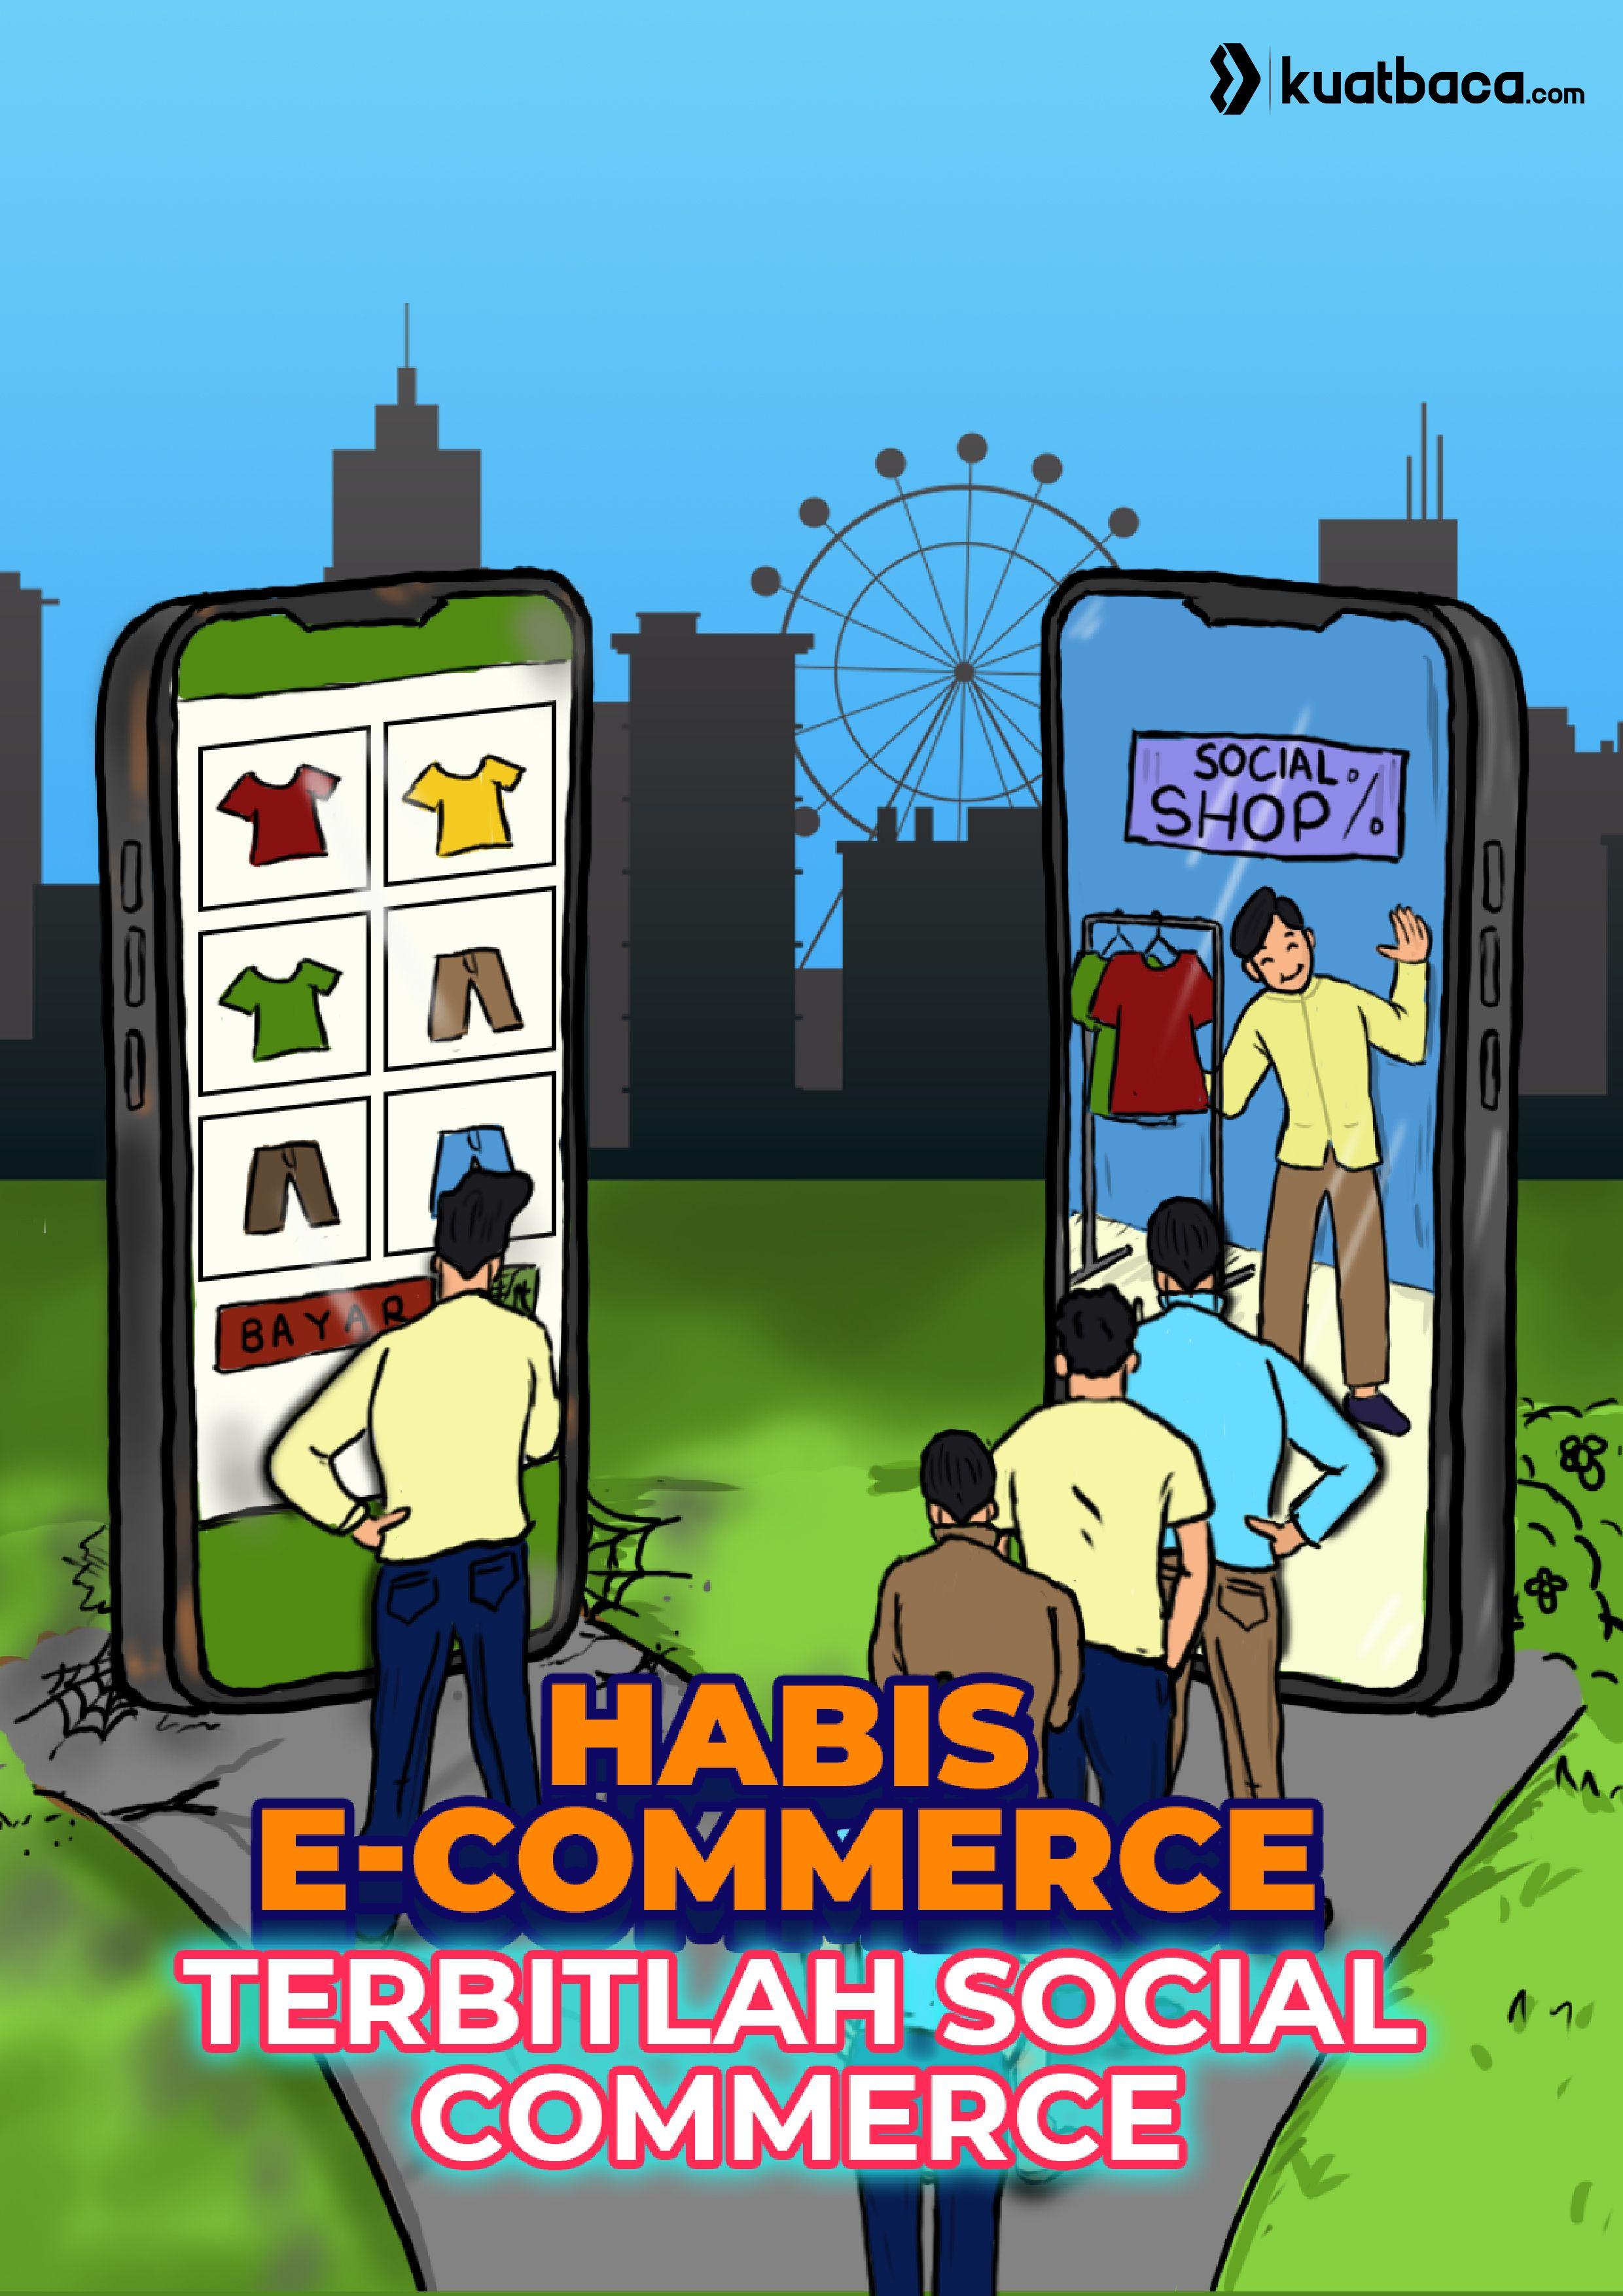 Habis E-Commerce, Terbitlah Social Commerce